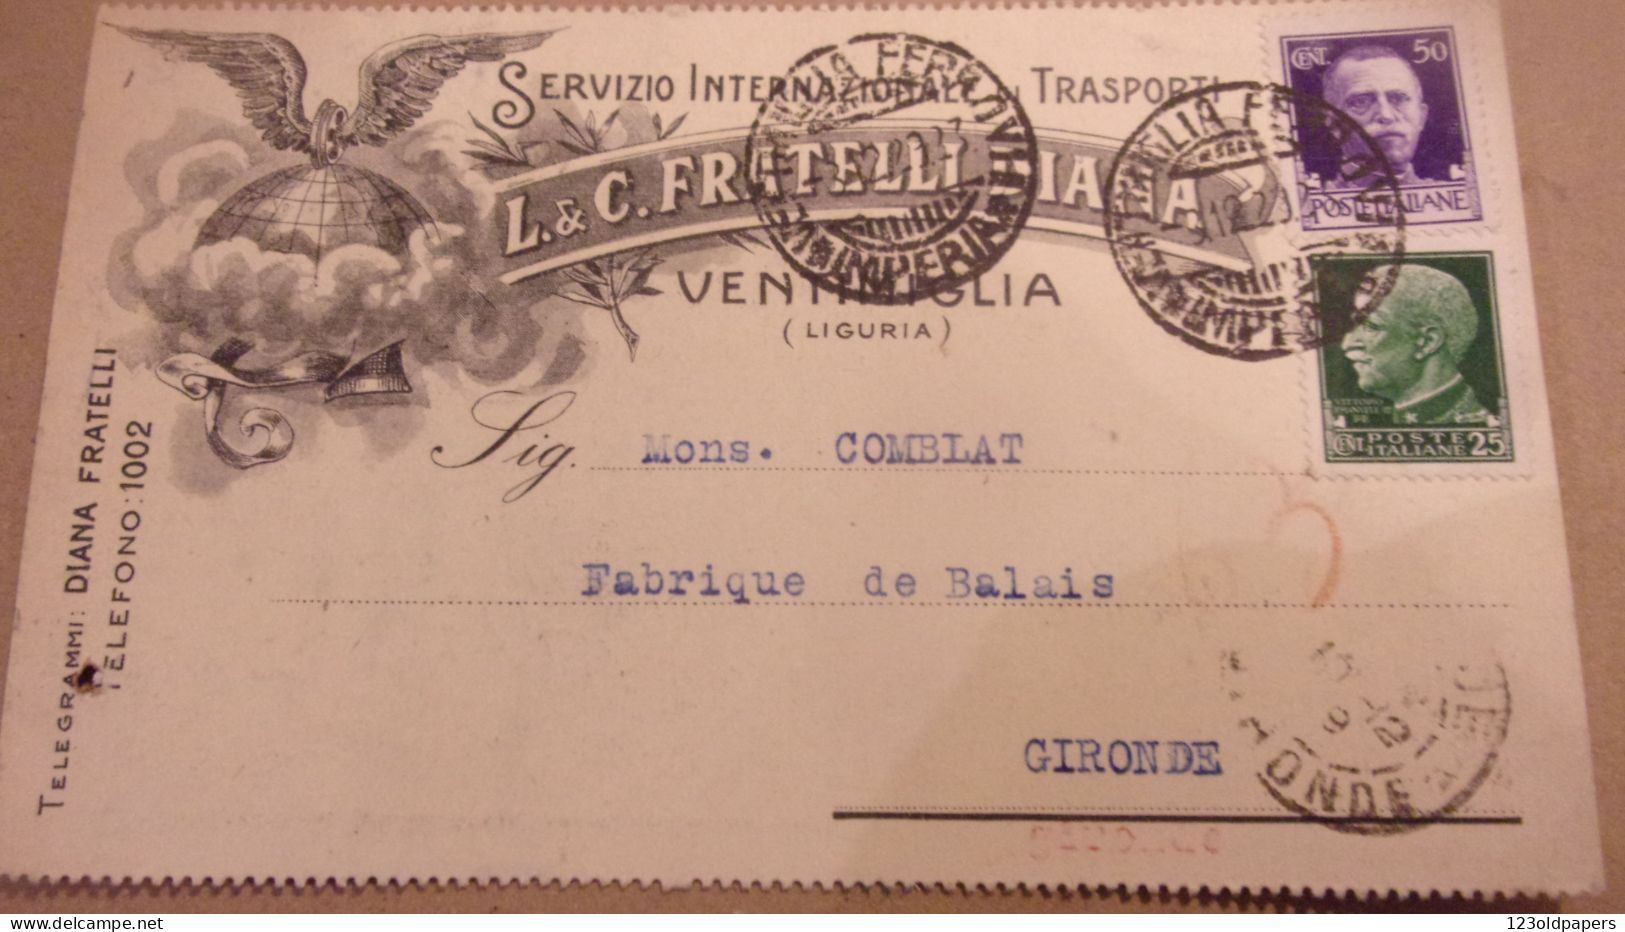 VENTIMIGLIA - IMPERIA - CARTOLINA COMMERCIALE "L.& C. FRATELLI DIANA" TRASPORTI INTERNAZIONALI - 1929 - Marcophilia